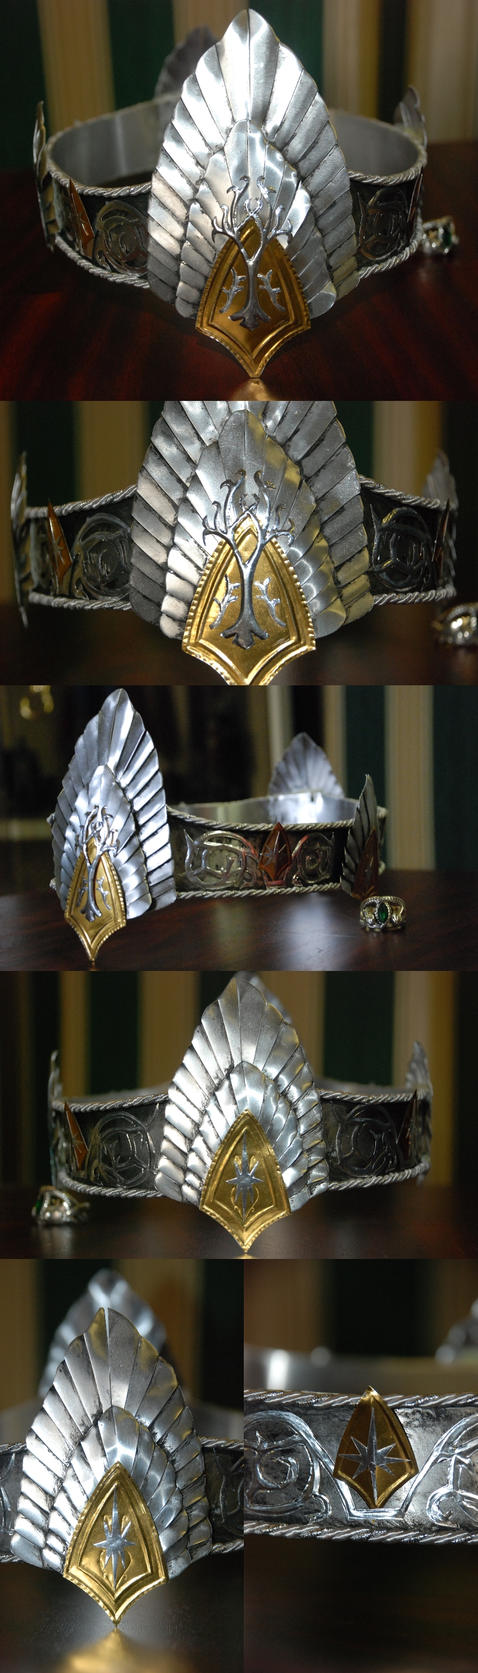 Aragorn's crown by larijone on DeviantArt